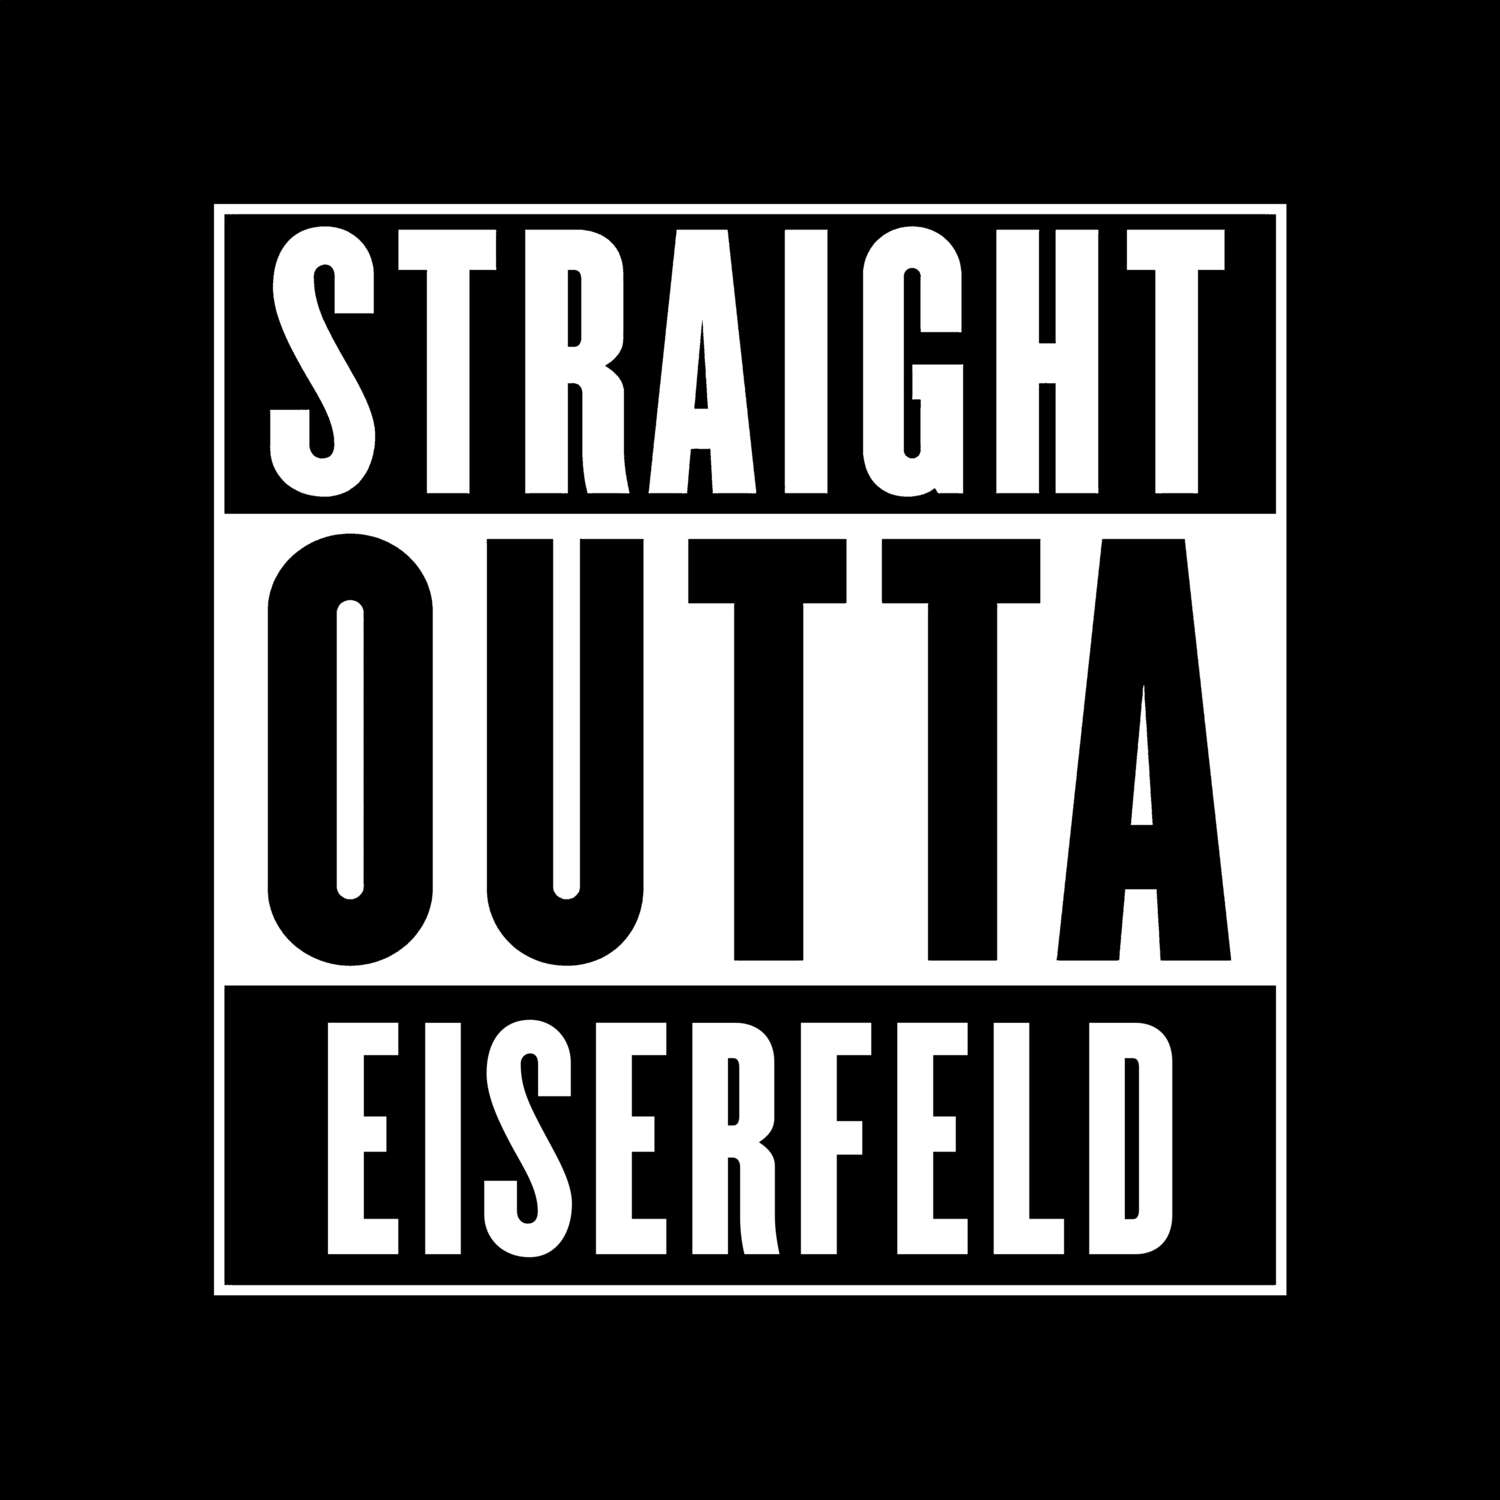 Eiserfeld T-Shirt »Straight Outta«